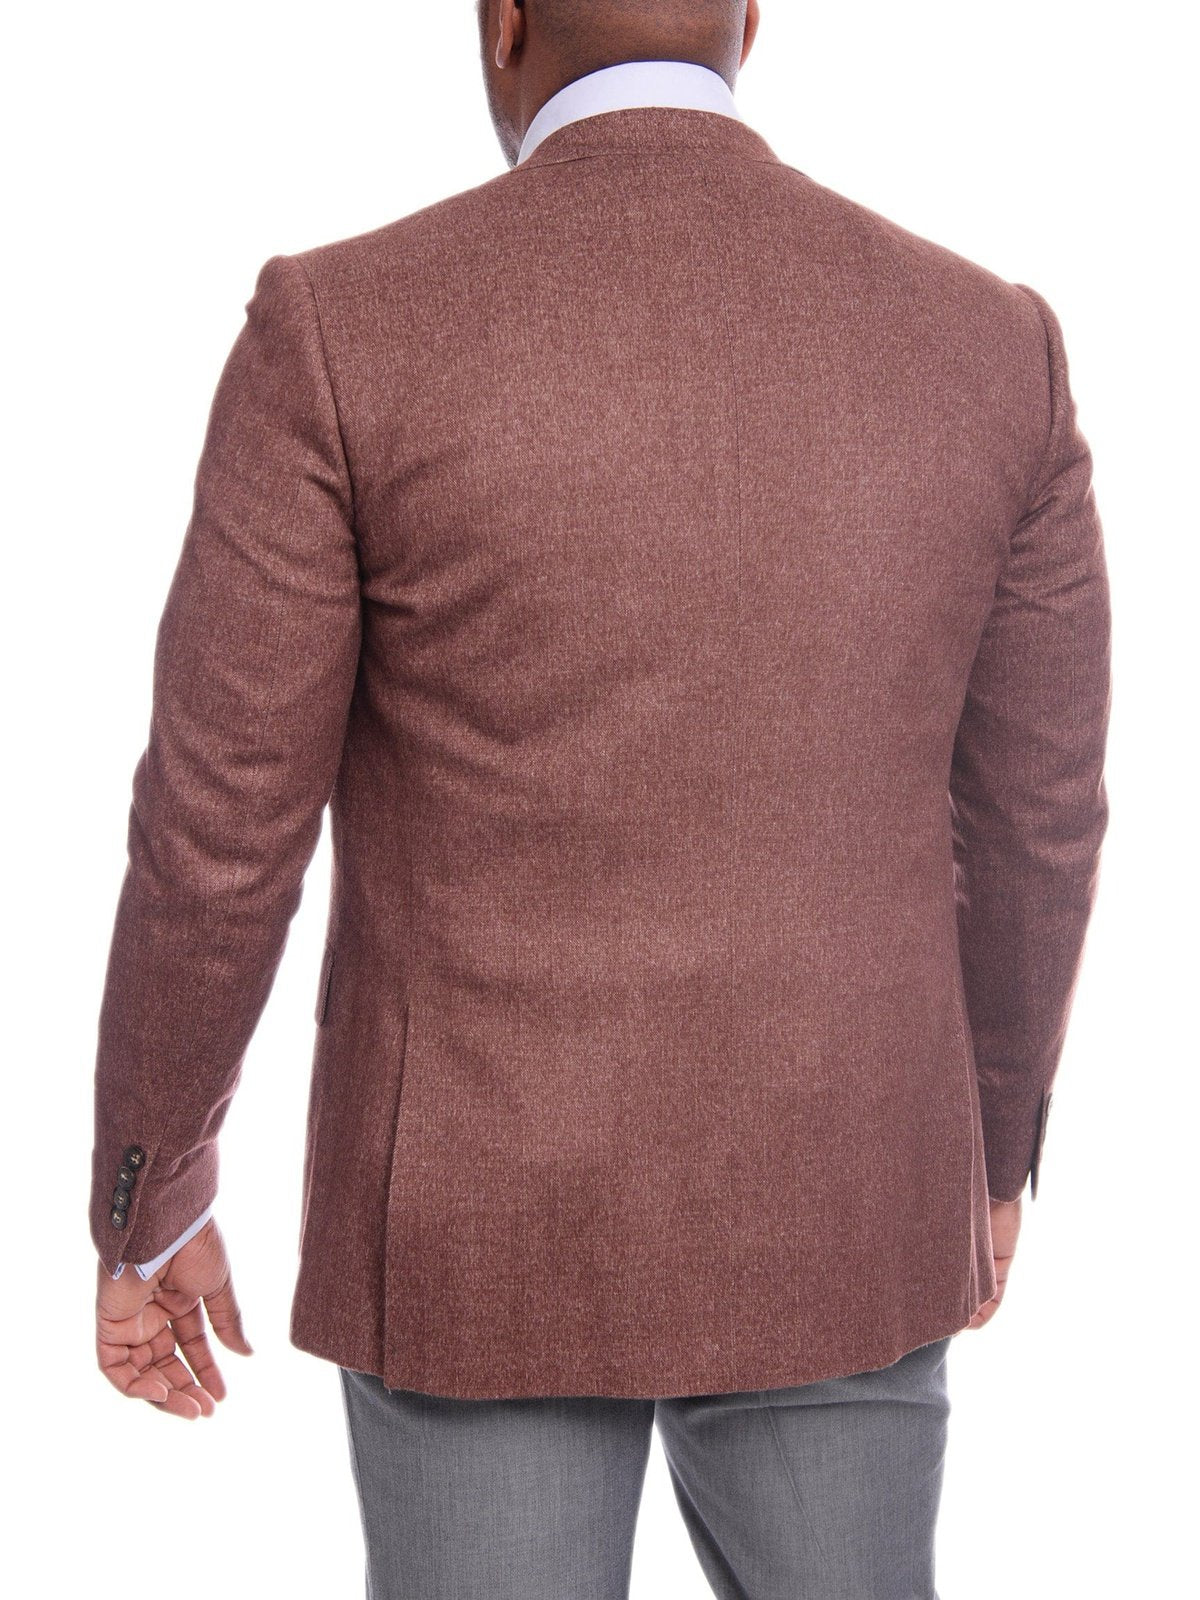 Napoli BLAZERS Napoli Slim Fit Brown Herringbone Half Canvassed Wool Cashmere Blazer Sportcoat